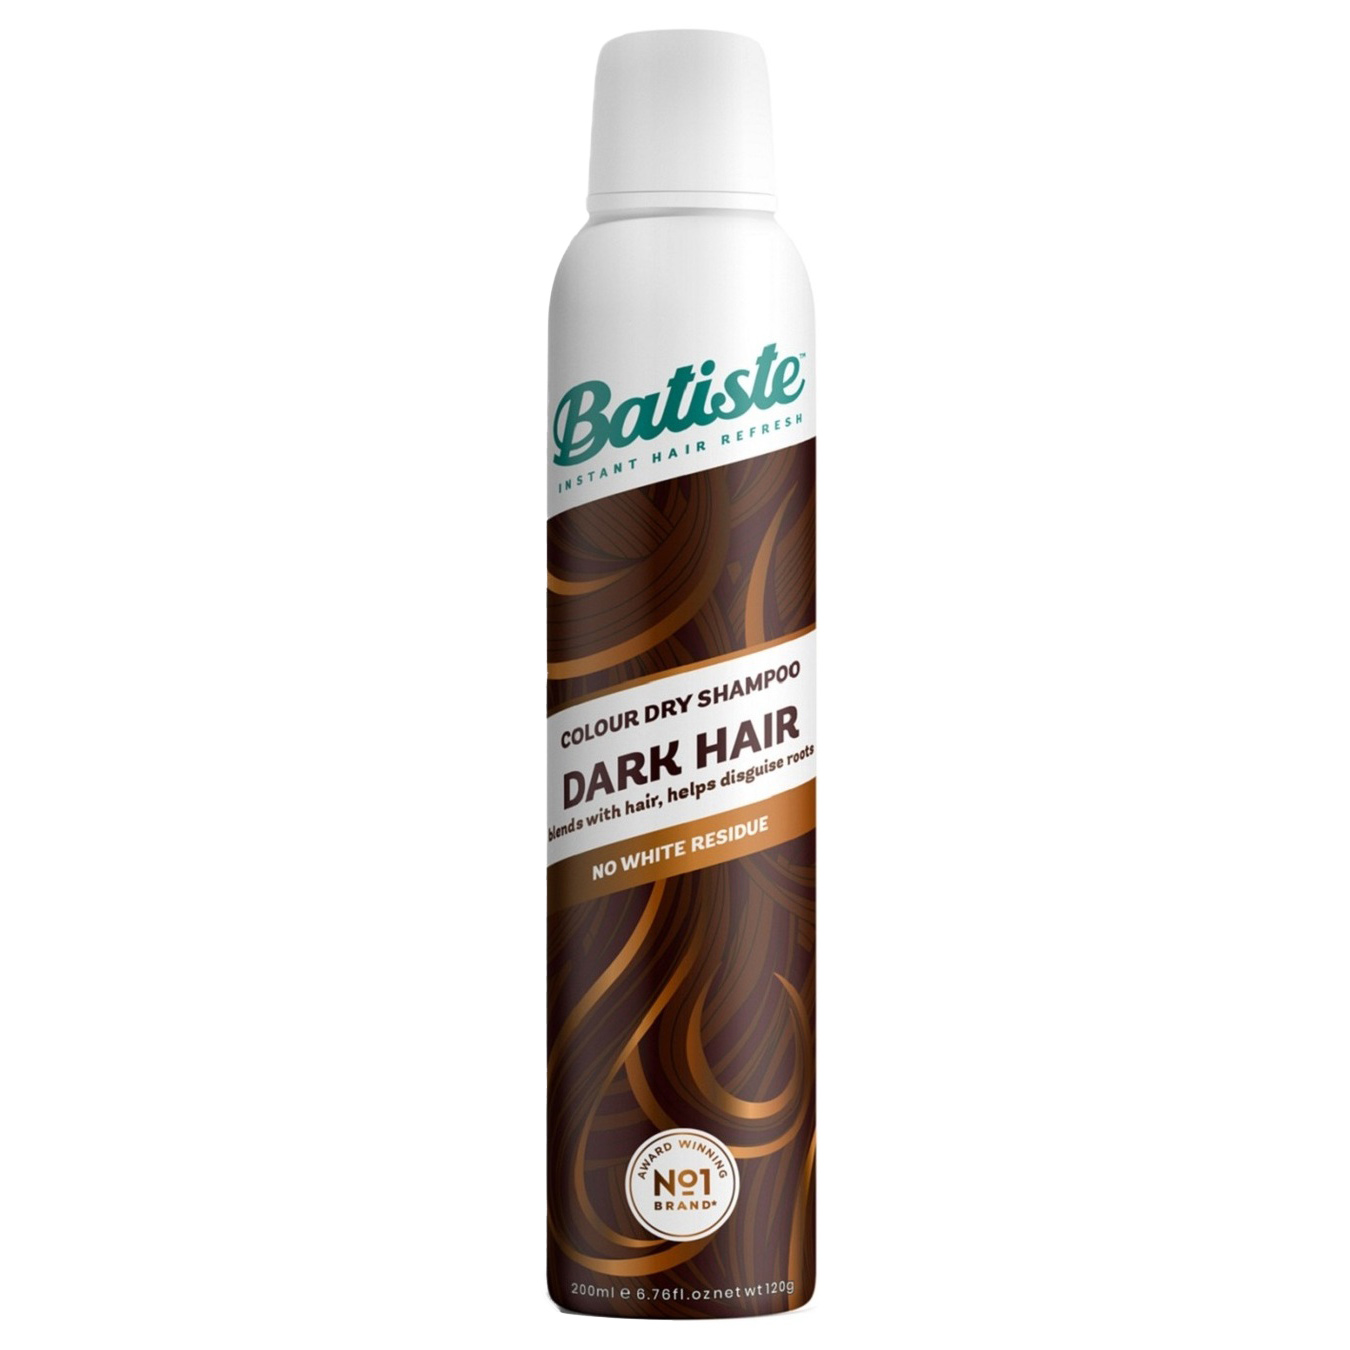 Batiste dry shampoo for dark hair 200ml